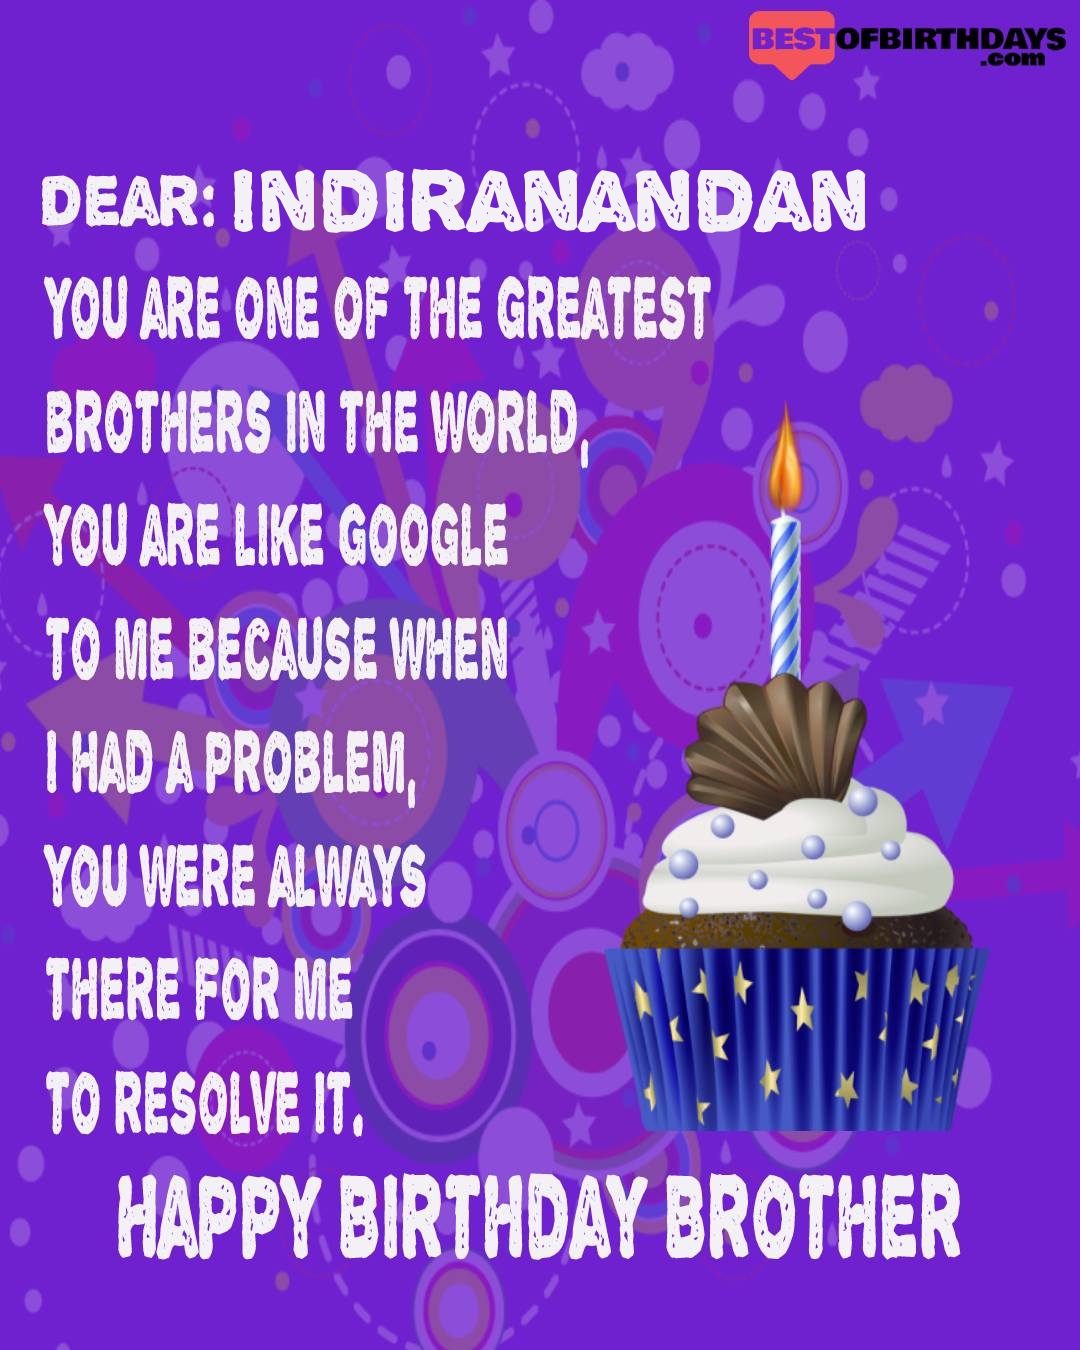 Happy birthday indiranandan bhai brother bro